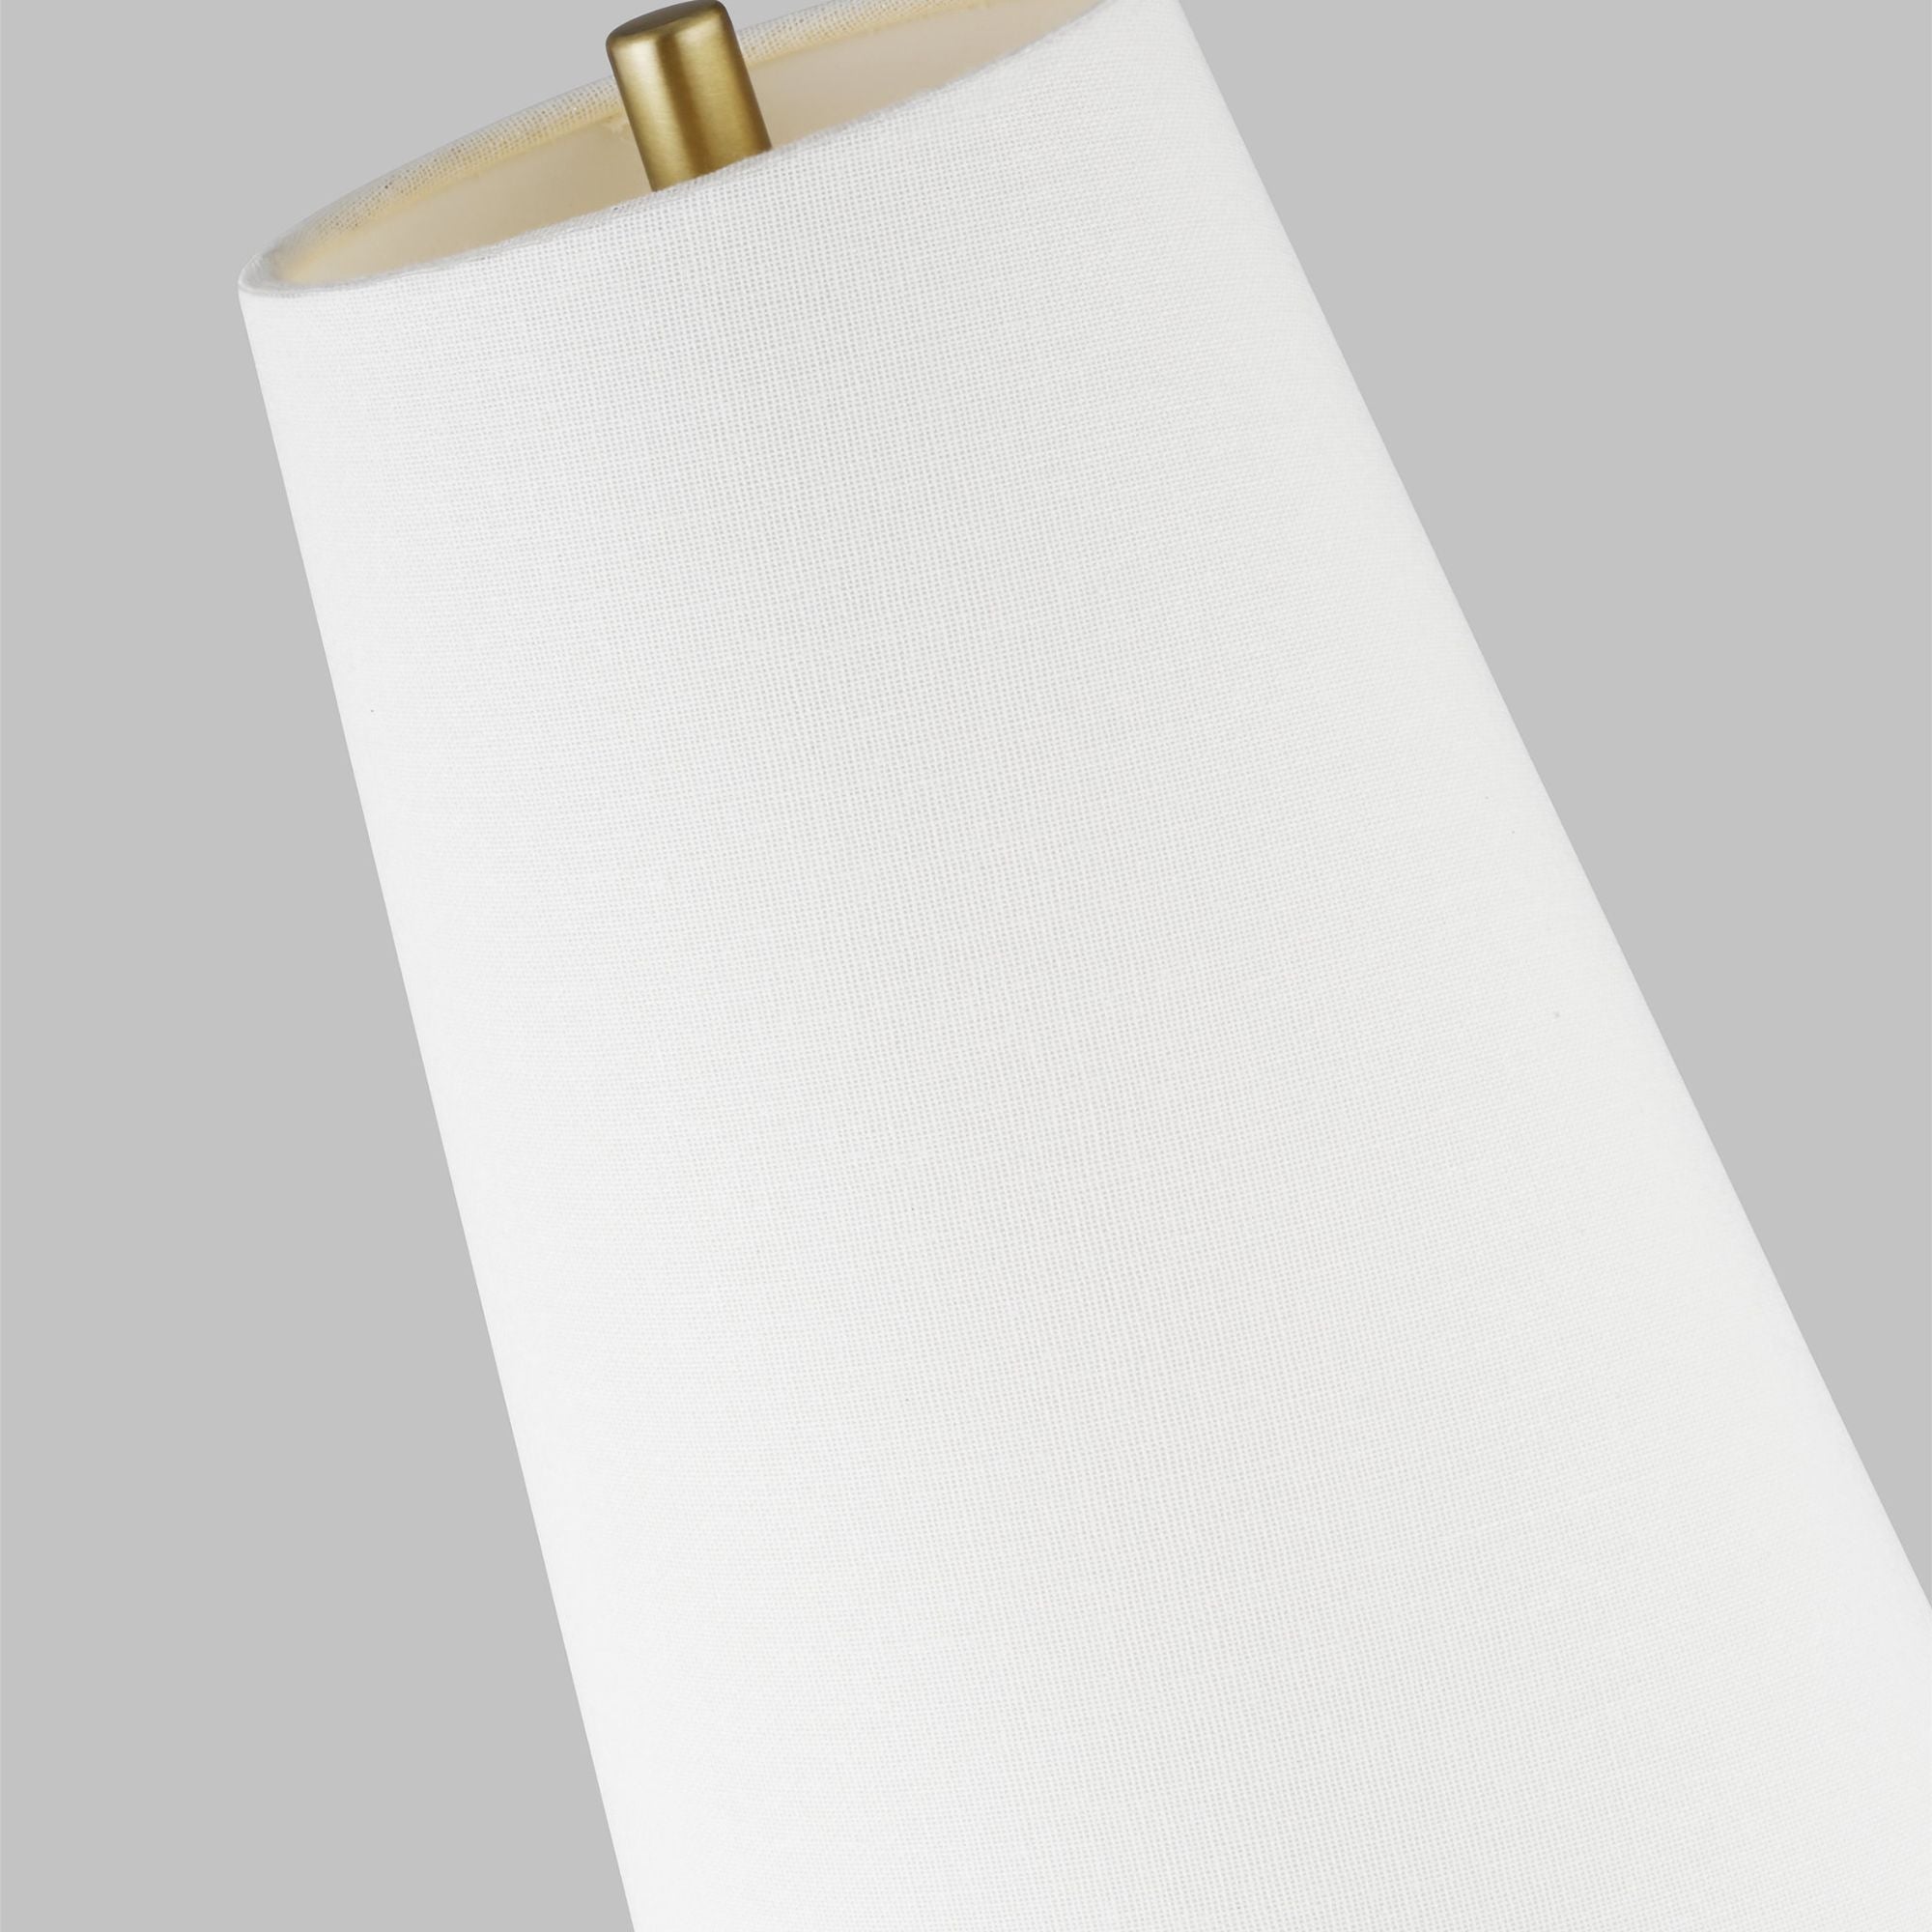 Kelly Wearstler Lorne Table Lamp in Arctic White